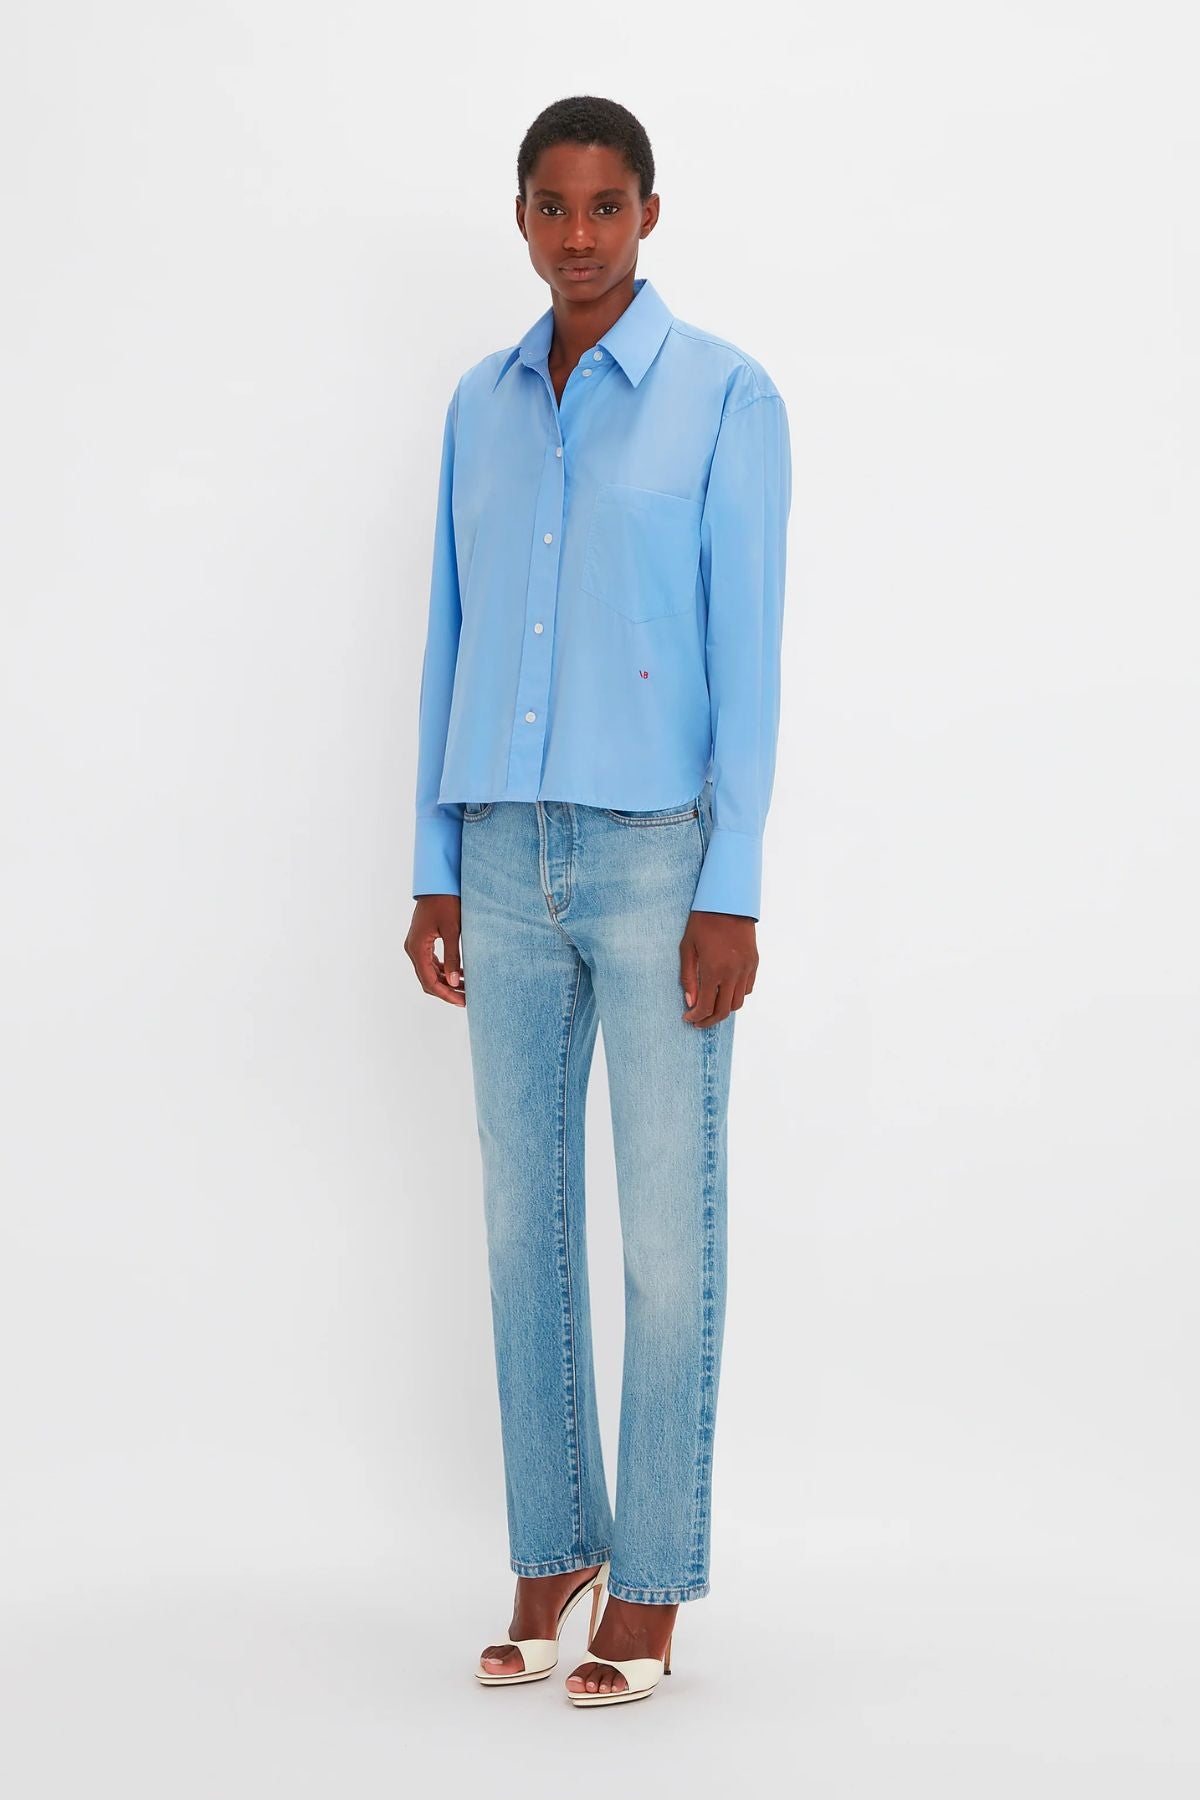 Victoria Beckham Long Sleeve Cropped Shirt - Oxford Blue